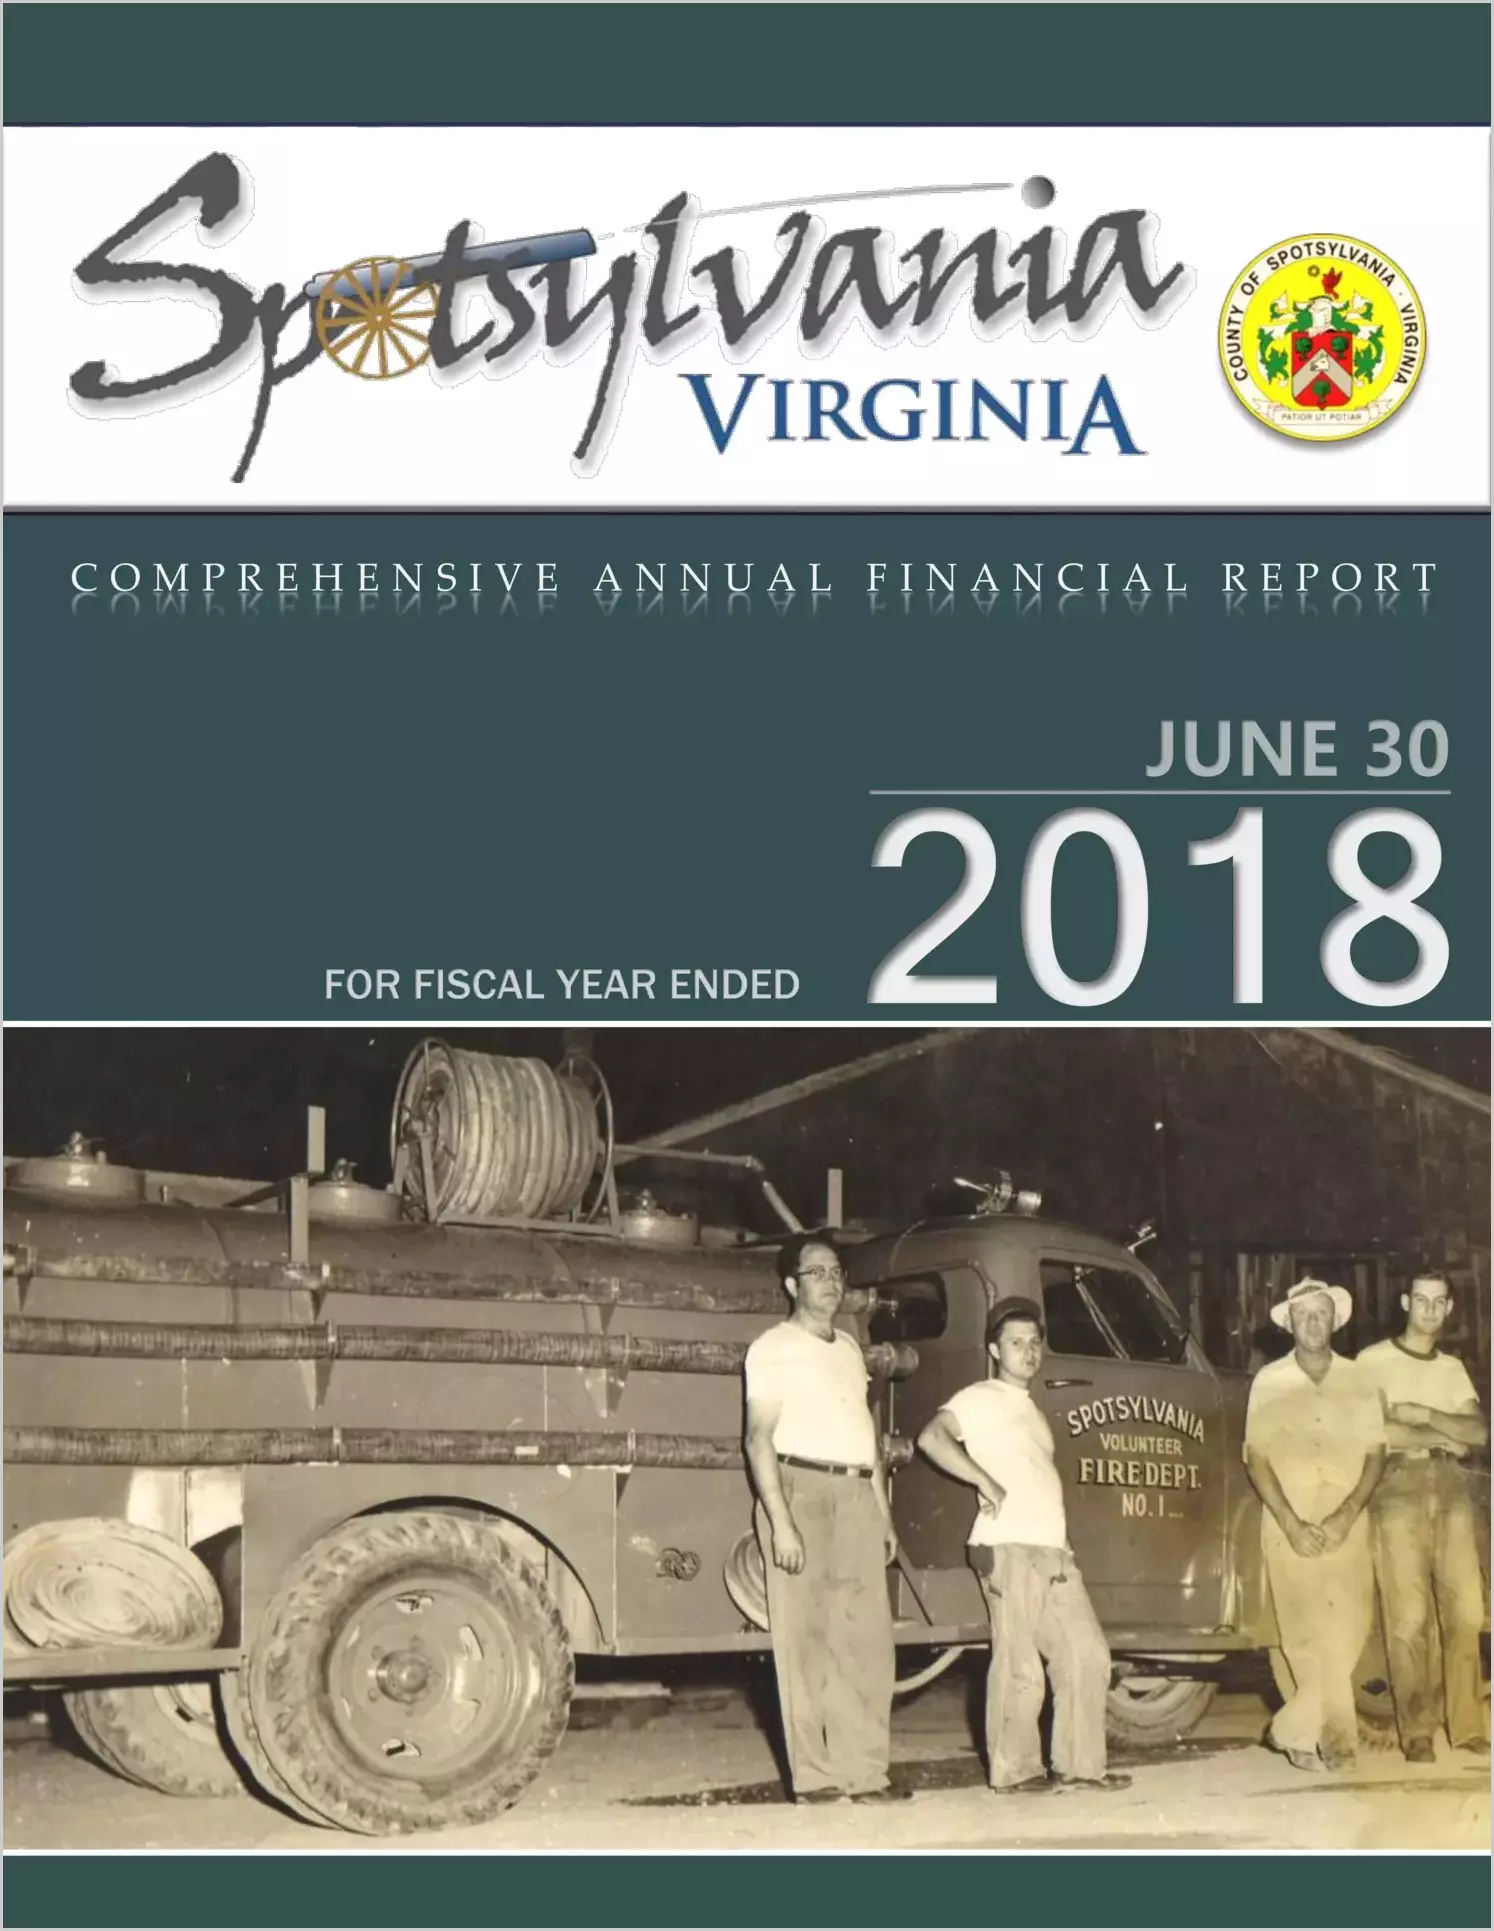 2018 Annual Financial Report for County of Spotsylvania